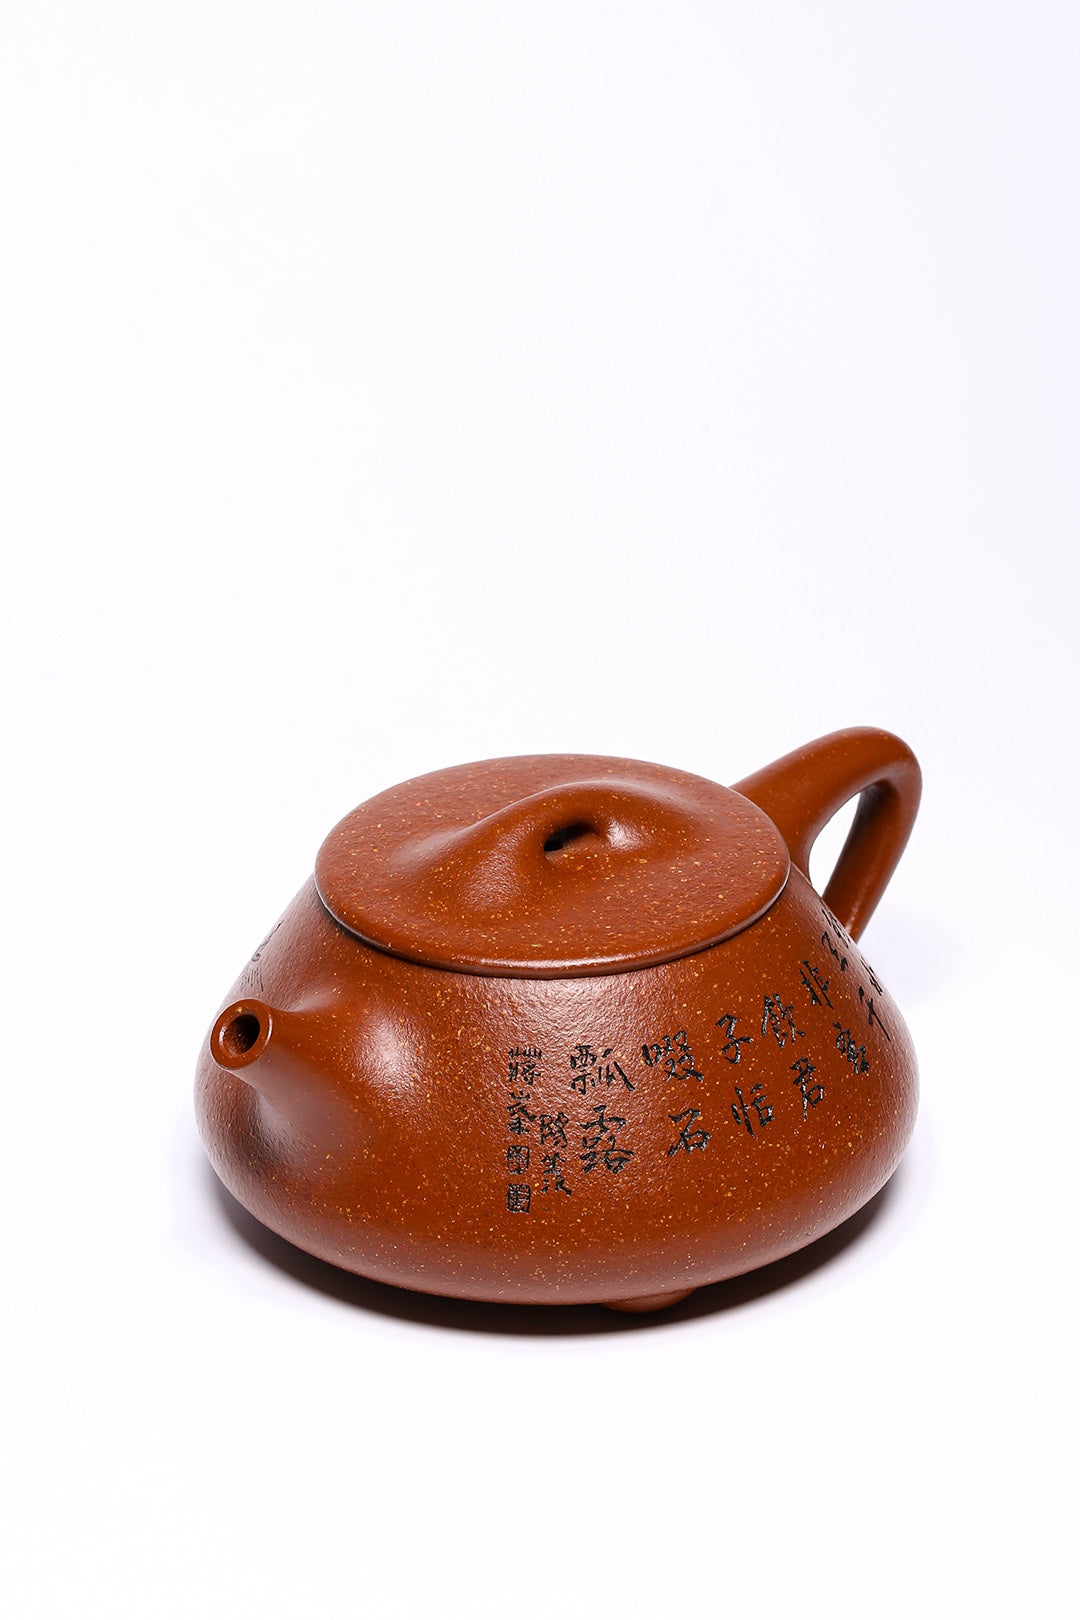 [Collection grade] Downhill material Jingzhou stone scoop Zisha teapot